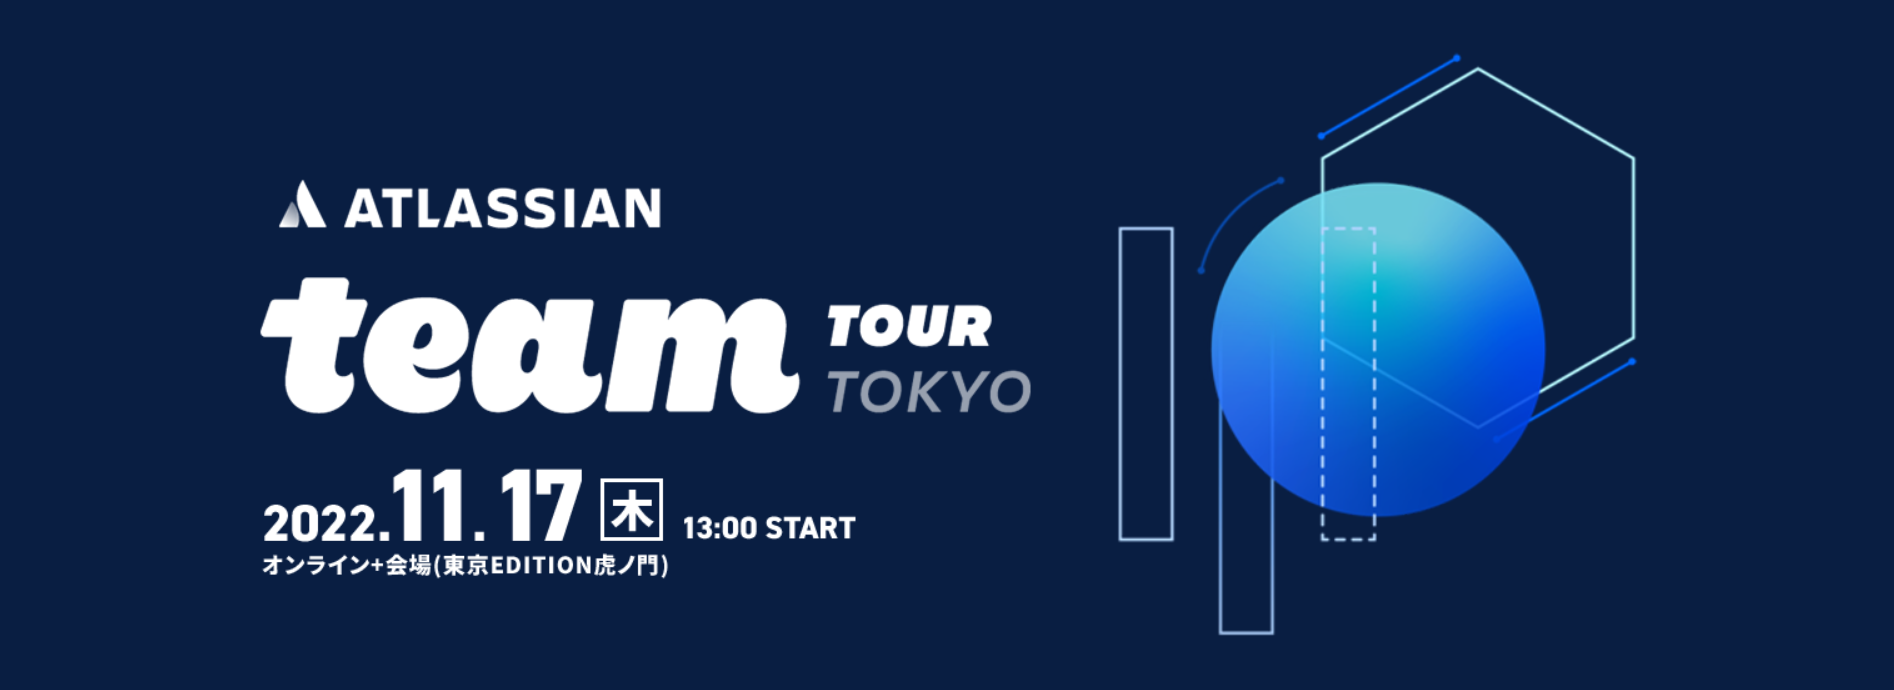  TEAM TOUR Tokyo 2022 業務が見える、つながる、動きだす